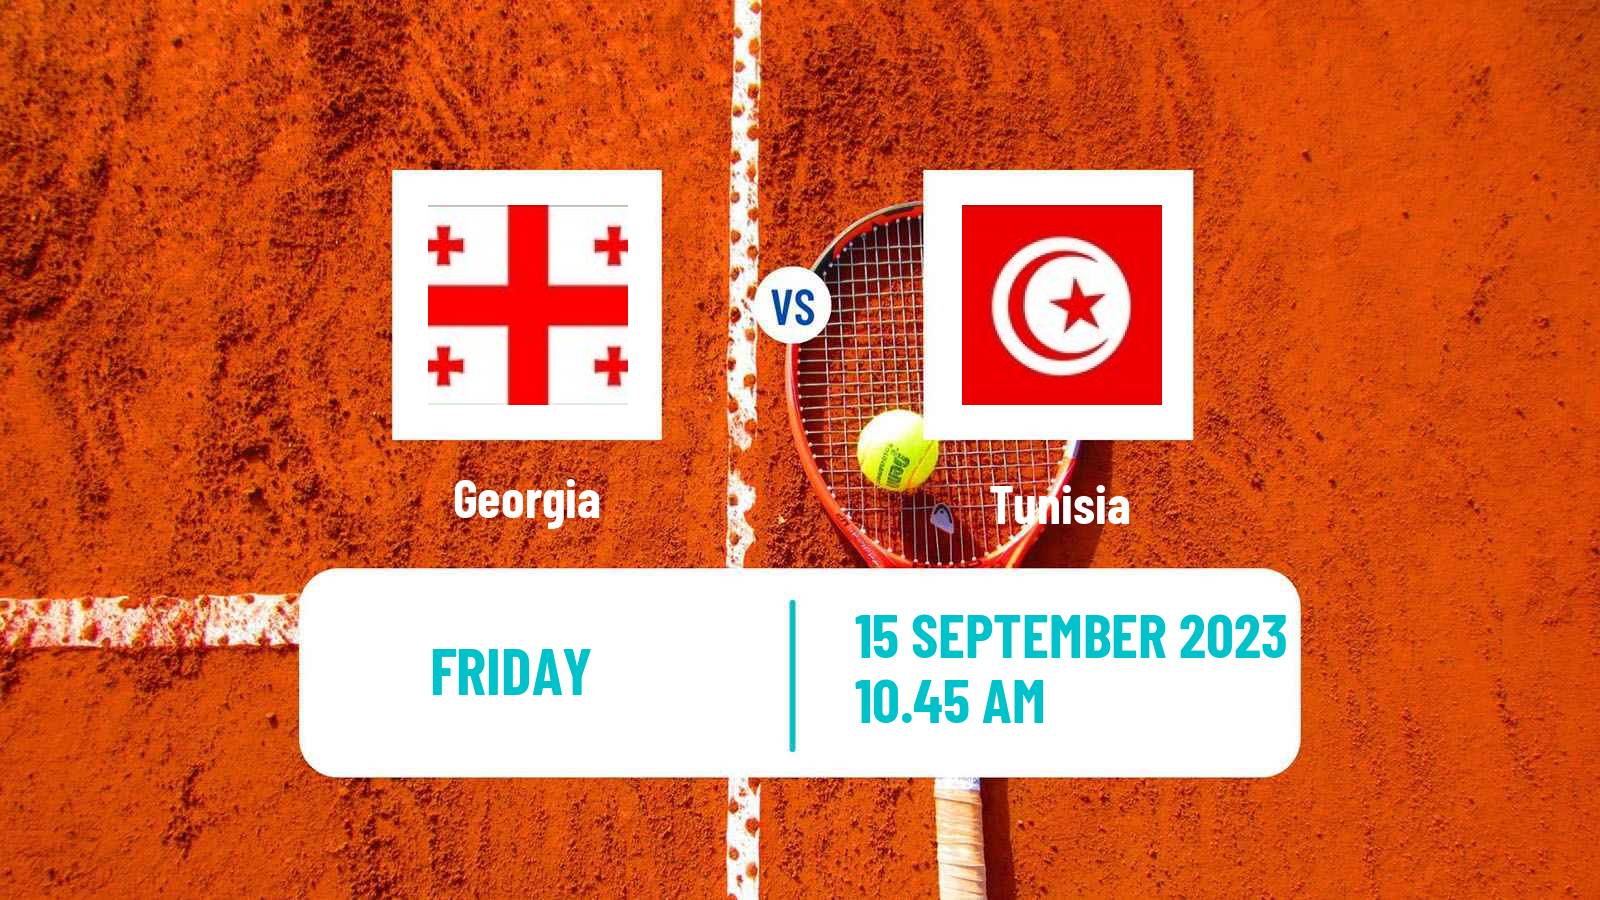 Tennis Davis Cup World Group II Teams Georgia - Tunisia